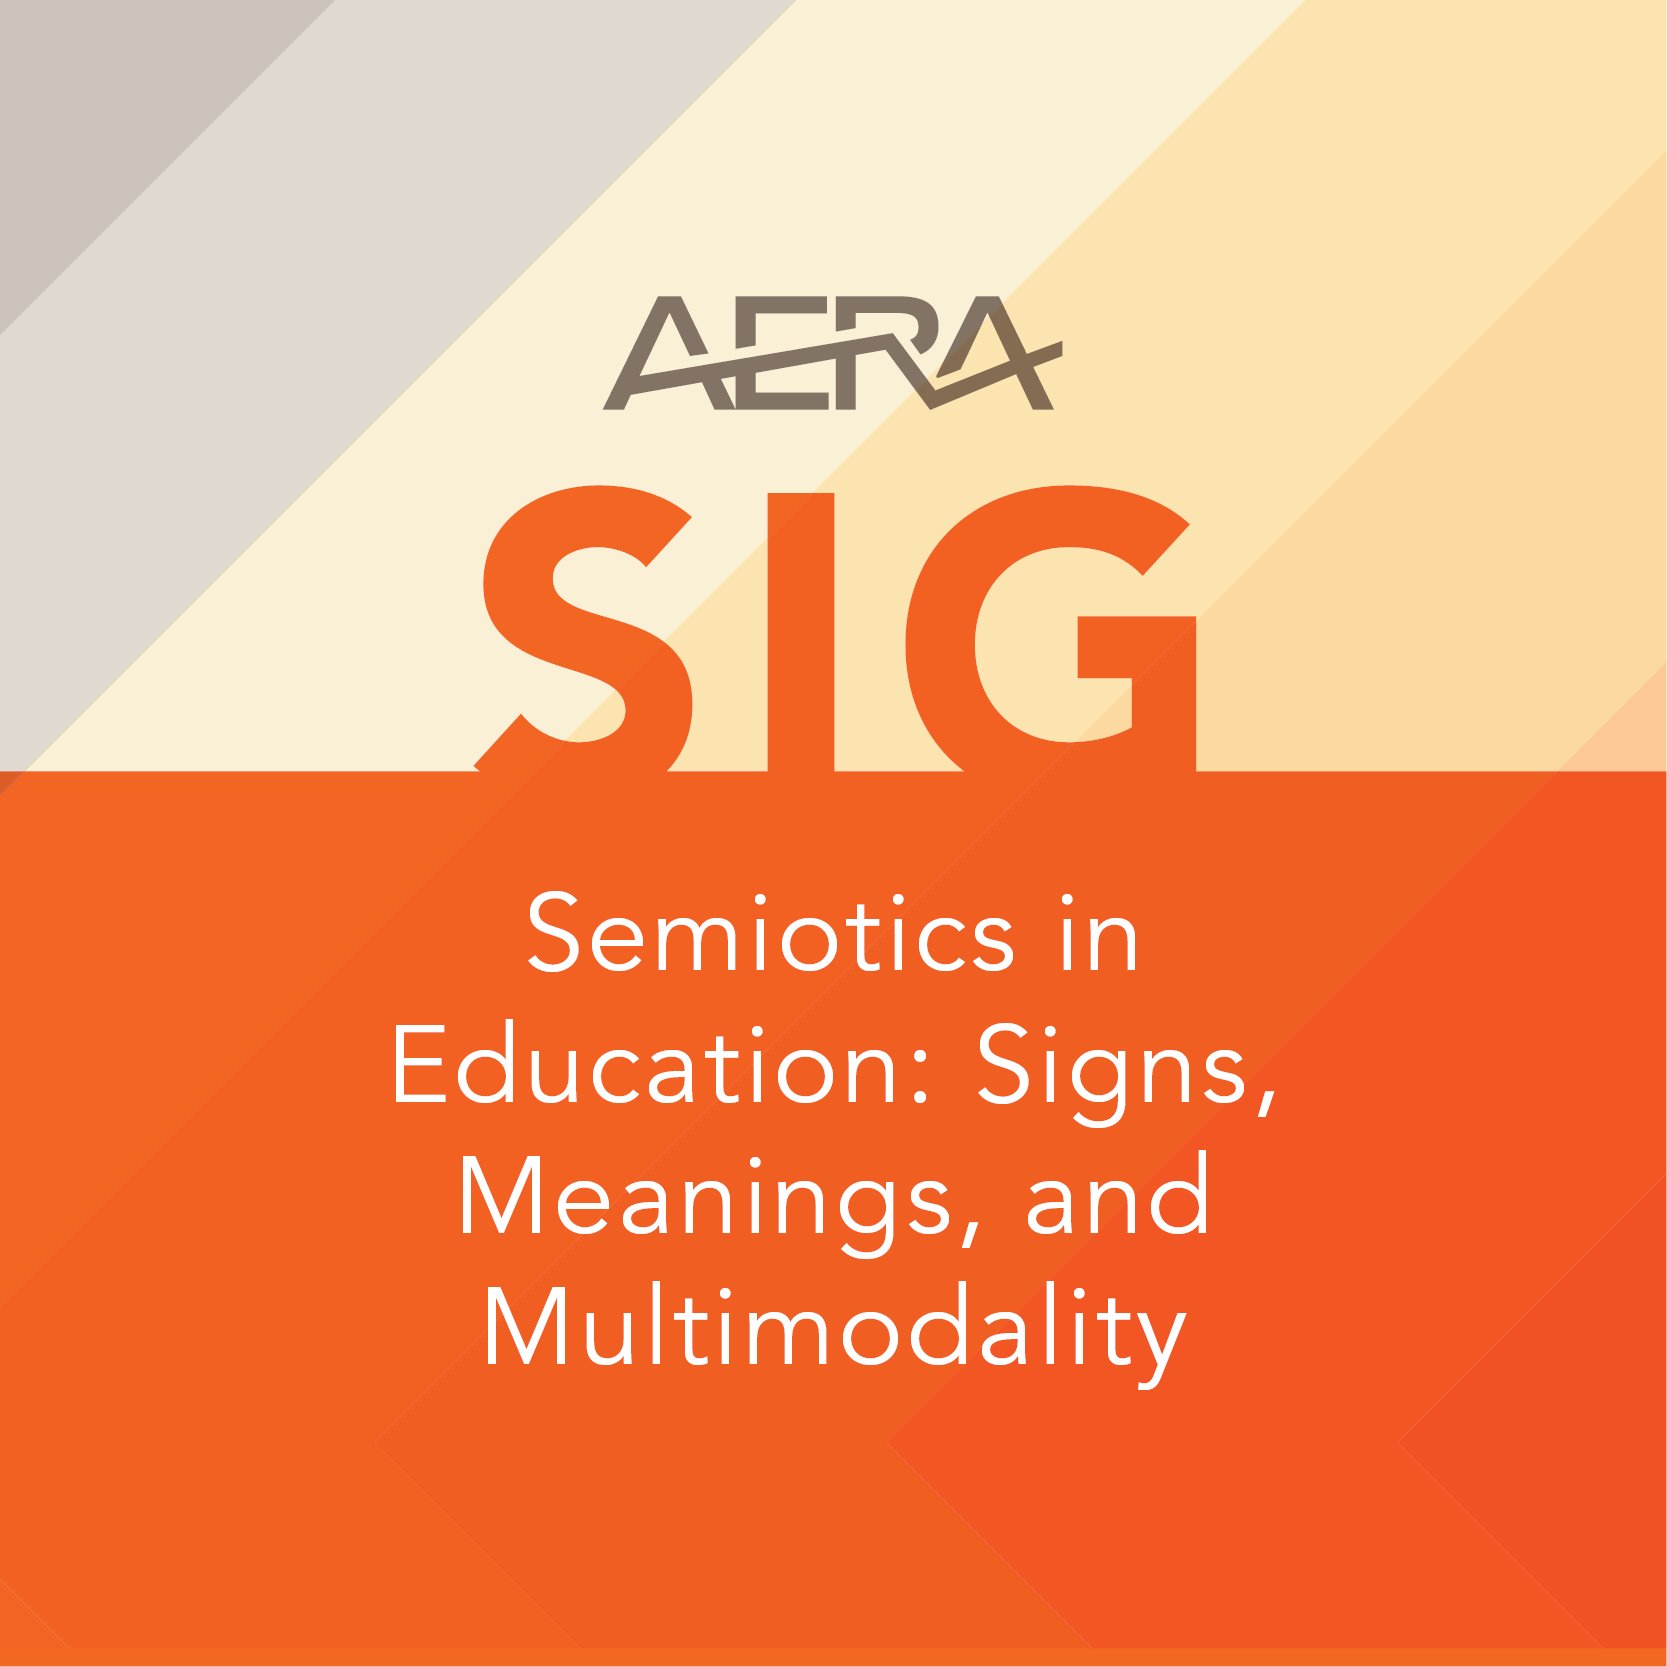 AERA Semiotics in Education SIG